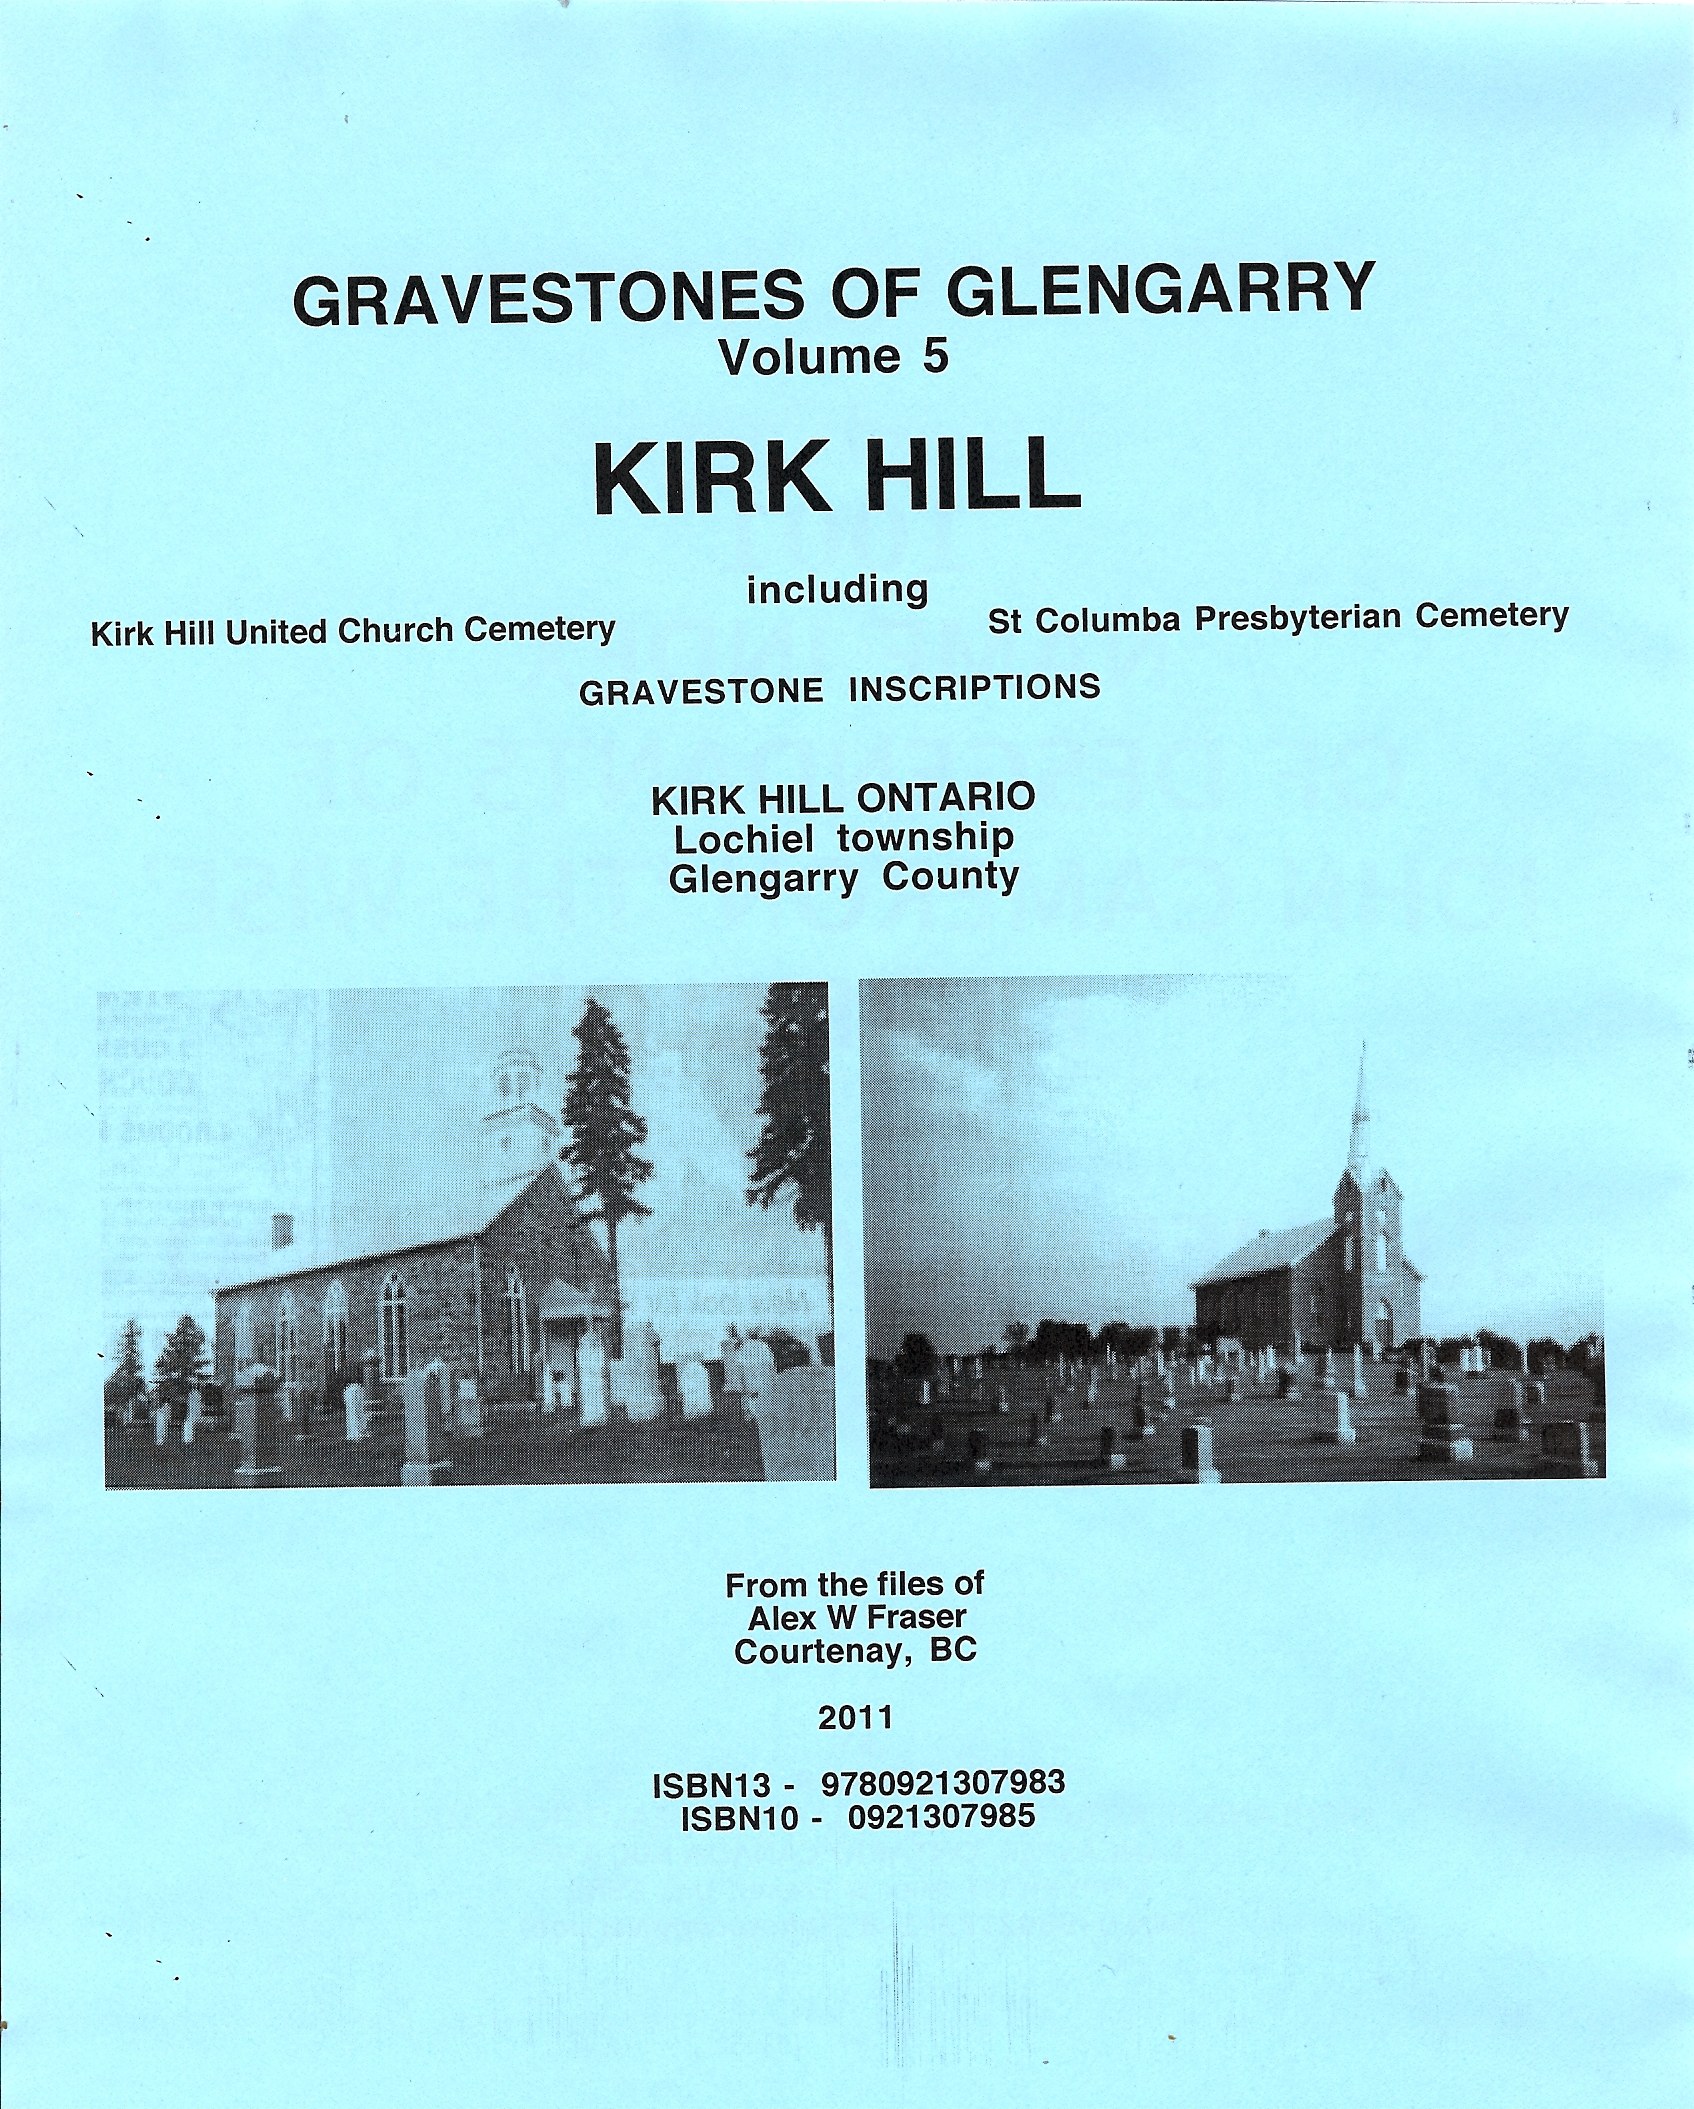 Gravestonesofglengarryv5